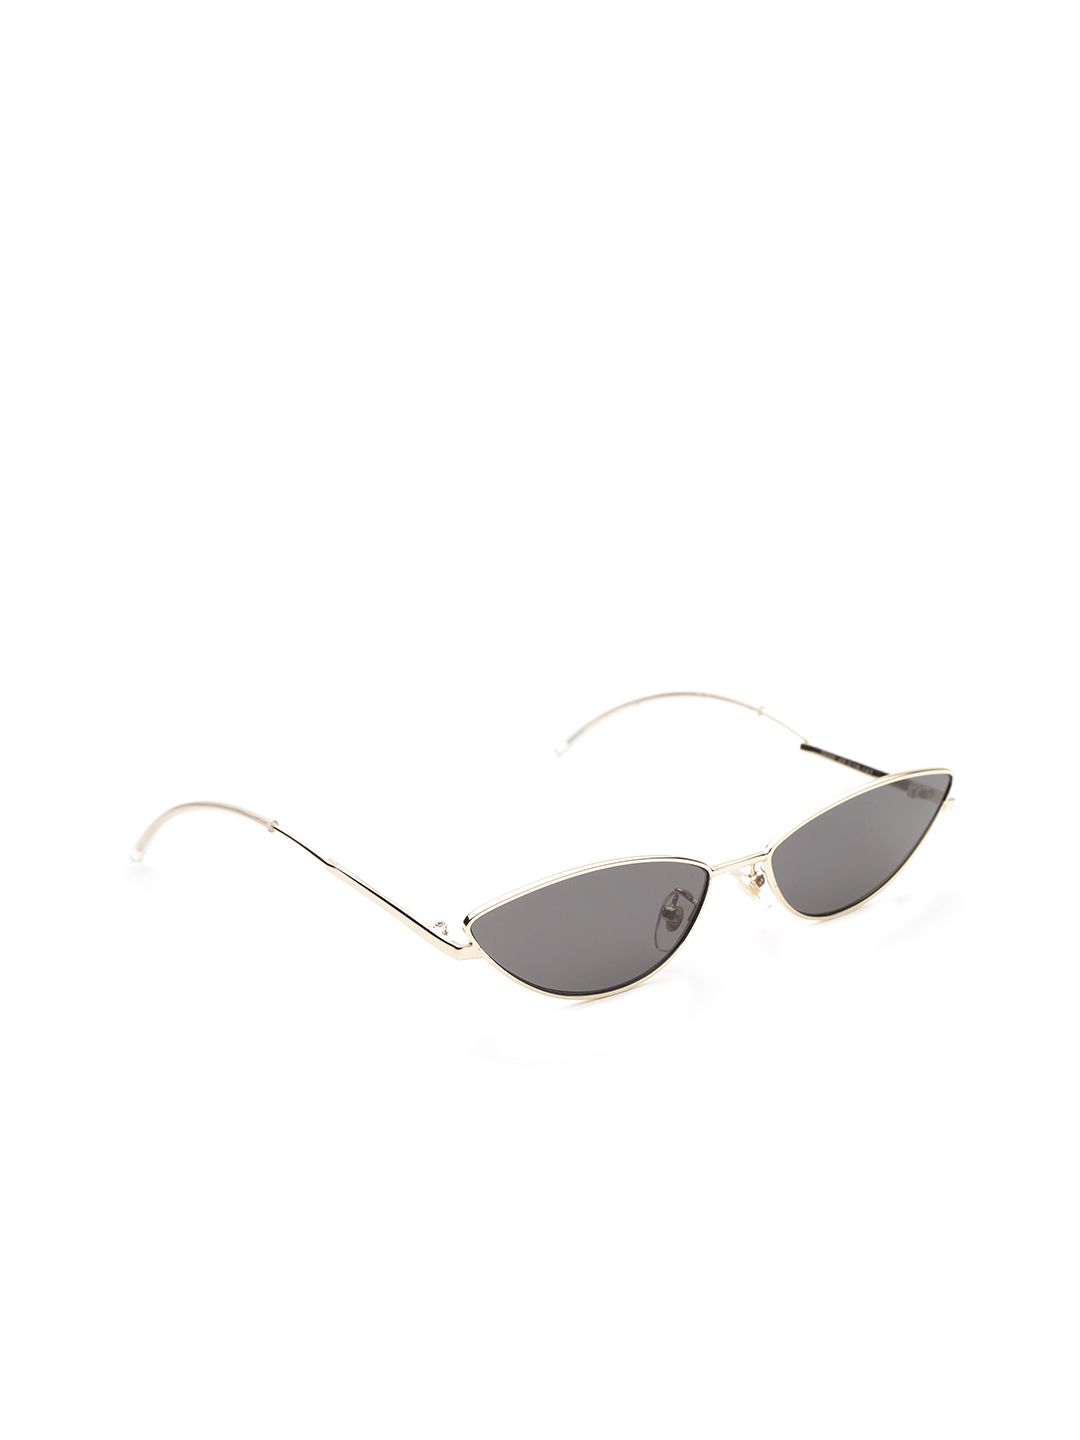 Carlton London Unisex UV Protected Lens Sunglasses Price in India